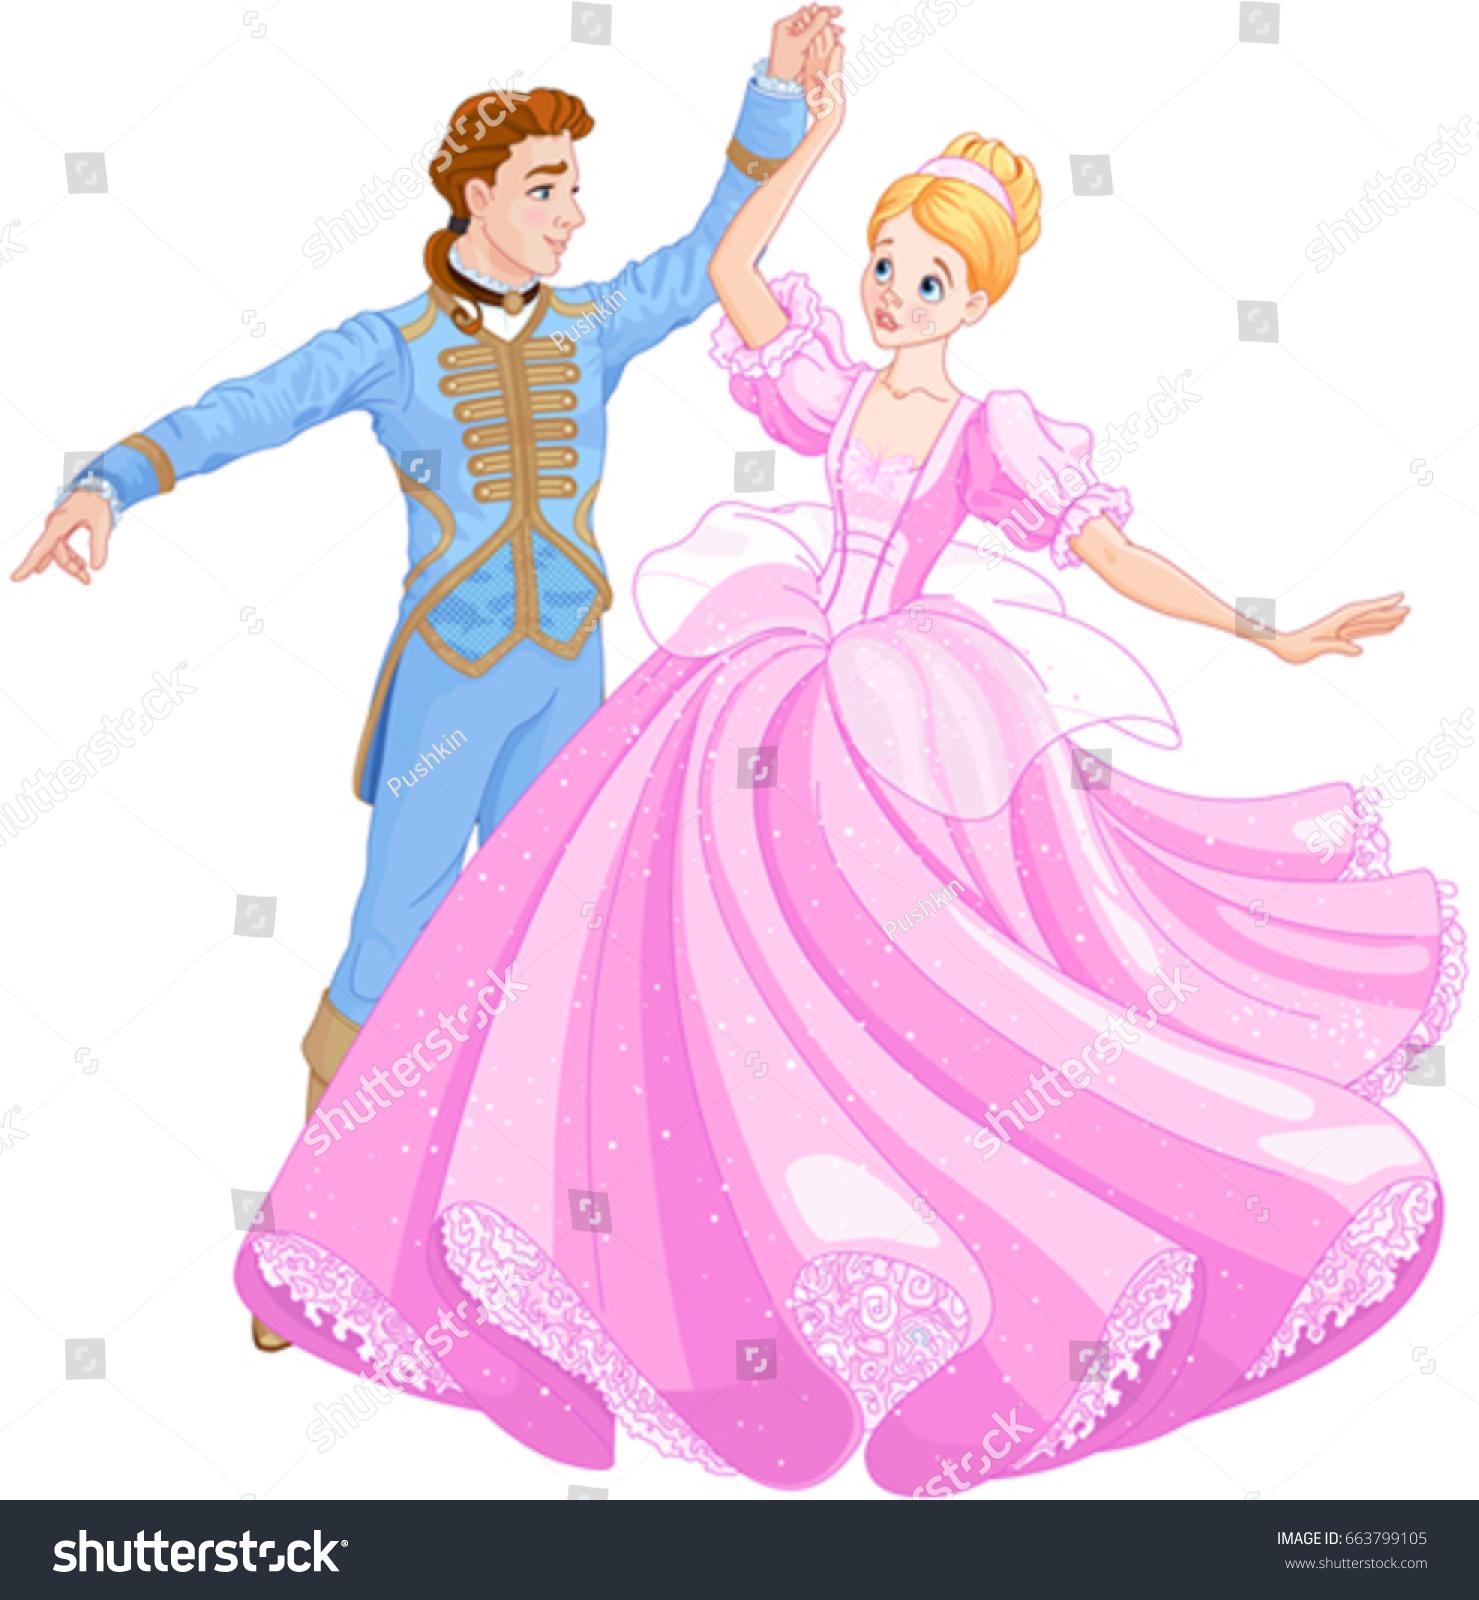 SVG of The royal ball dance of Cinderella and Prince svg